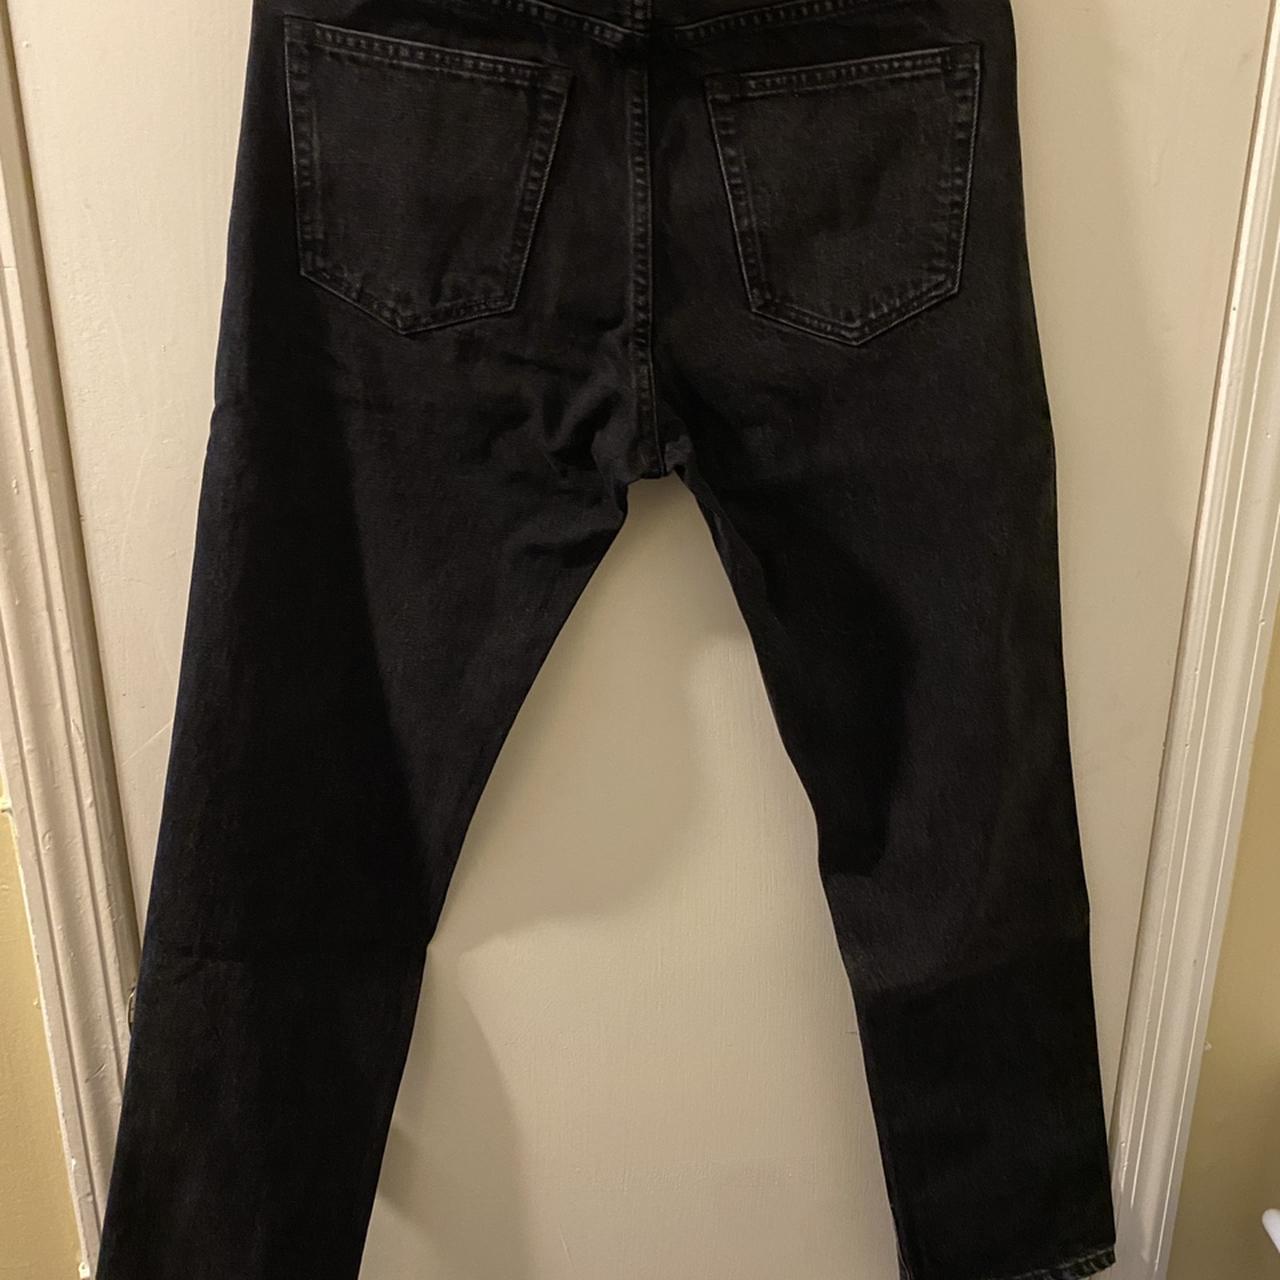 DS Supreme stone washed black slim jeans